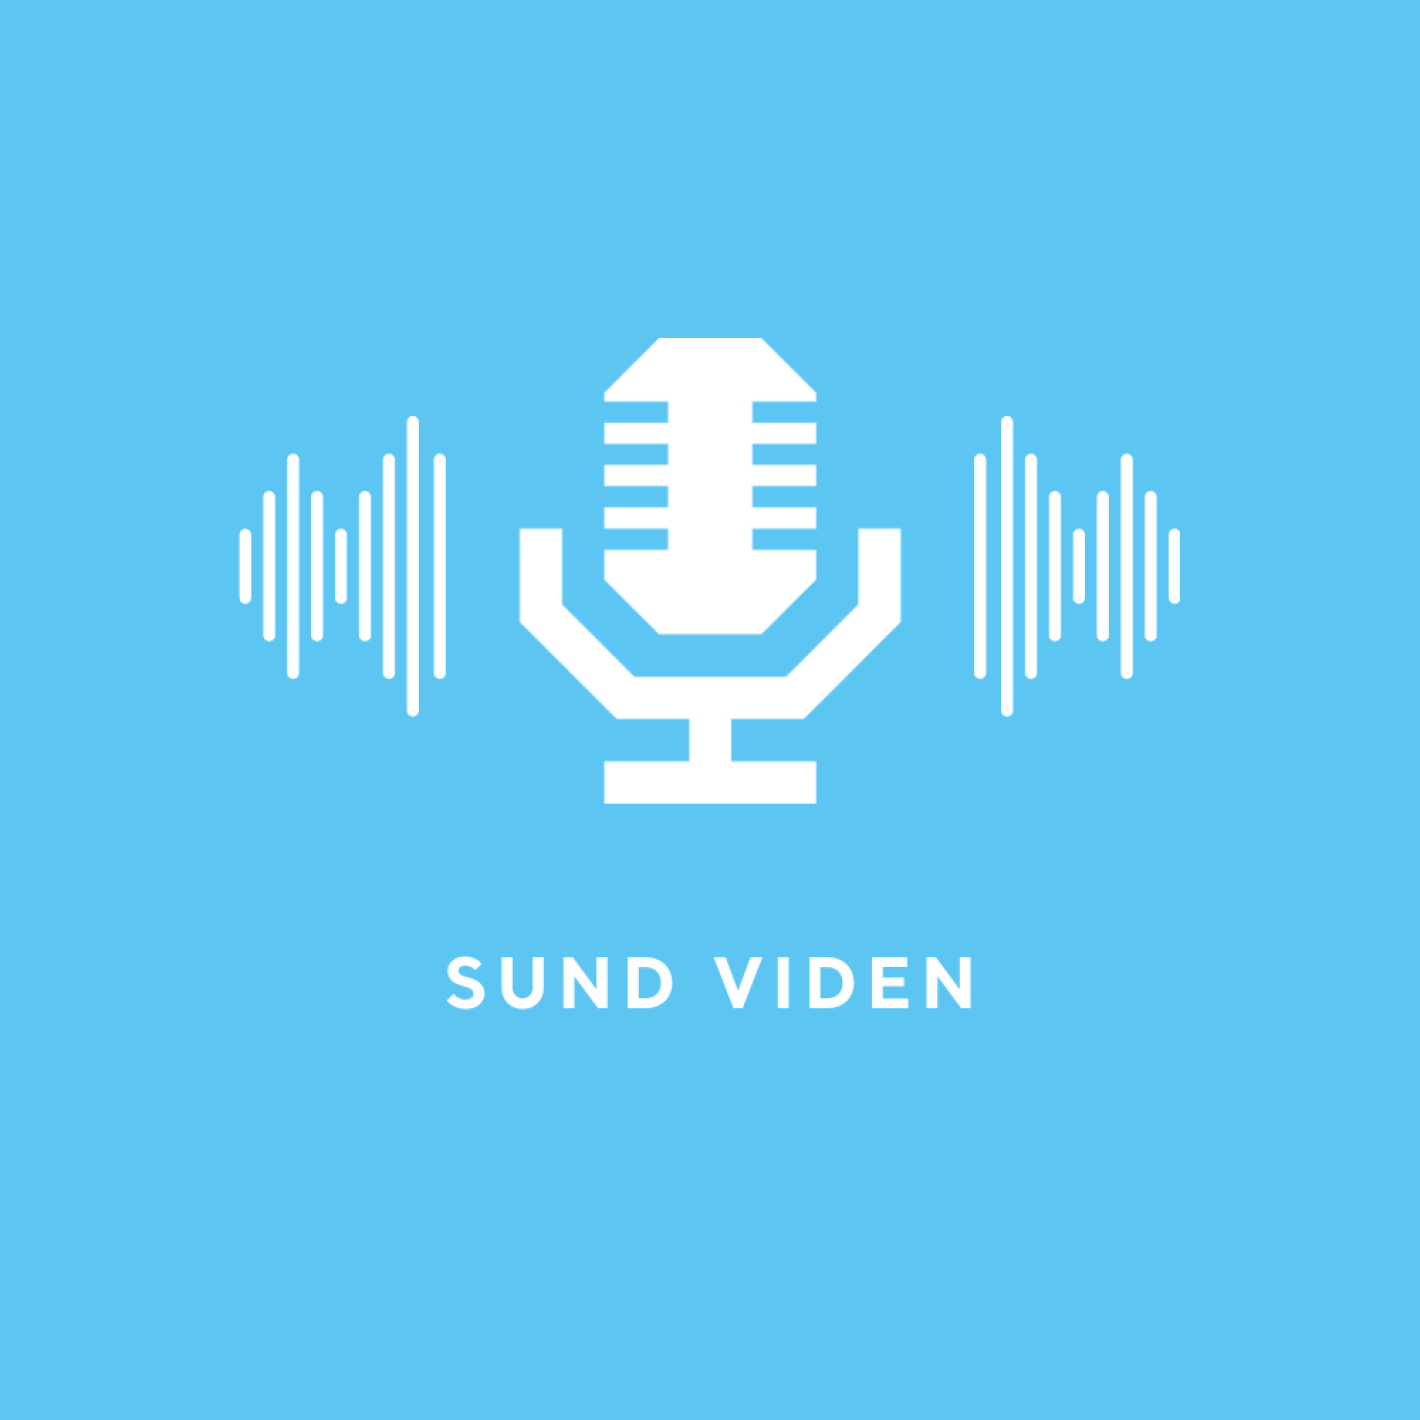 Podcast logo Sund viden